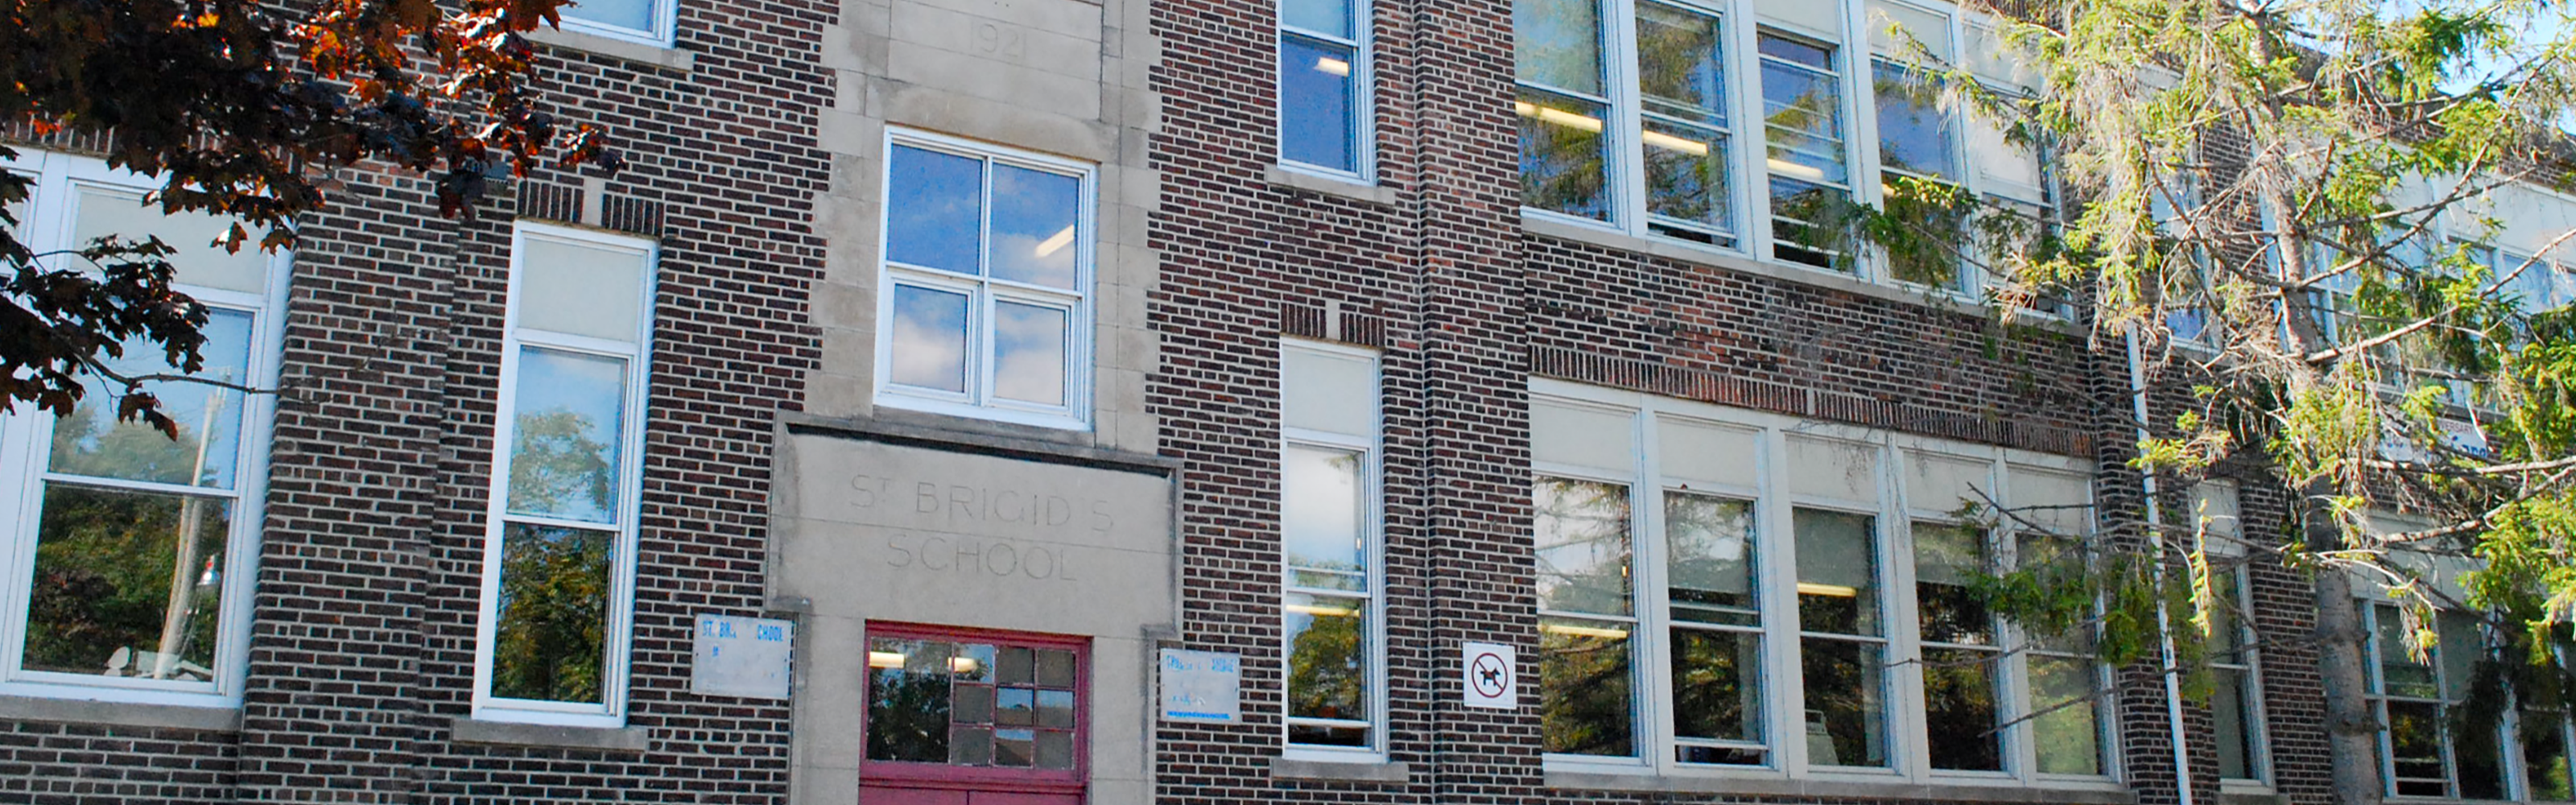 The front of the St. Brigid Catholic School building.